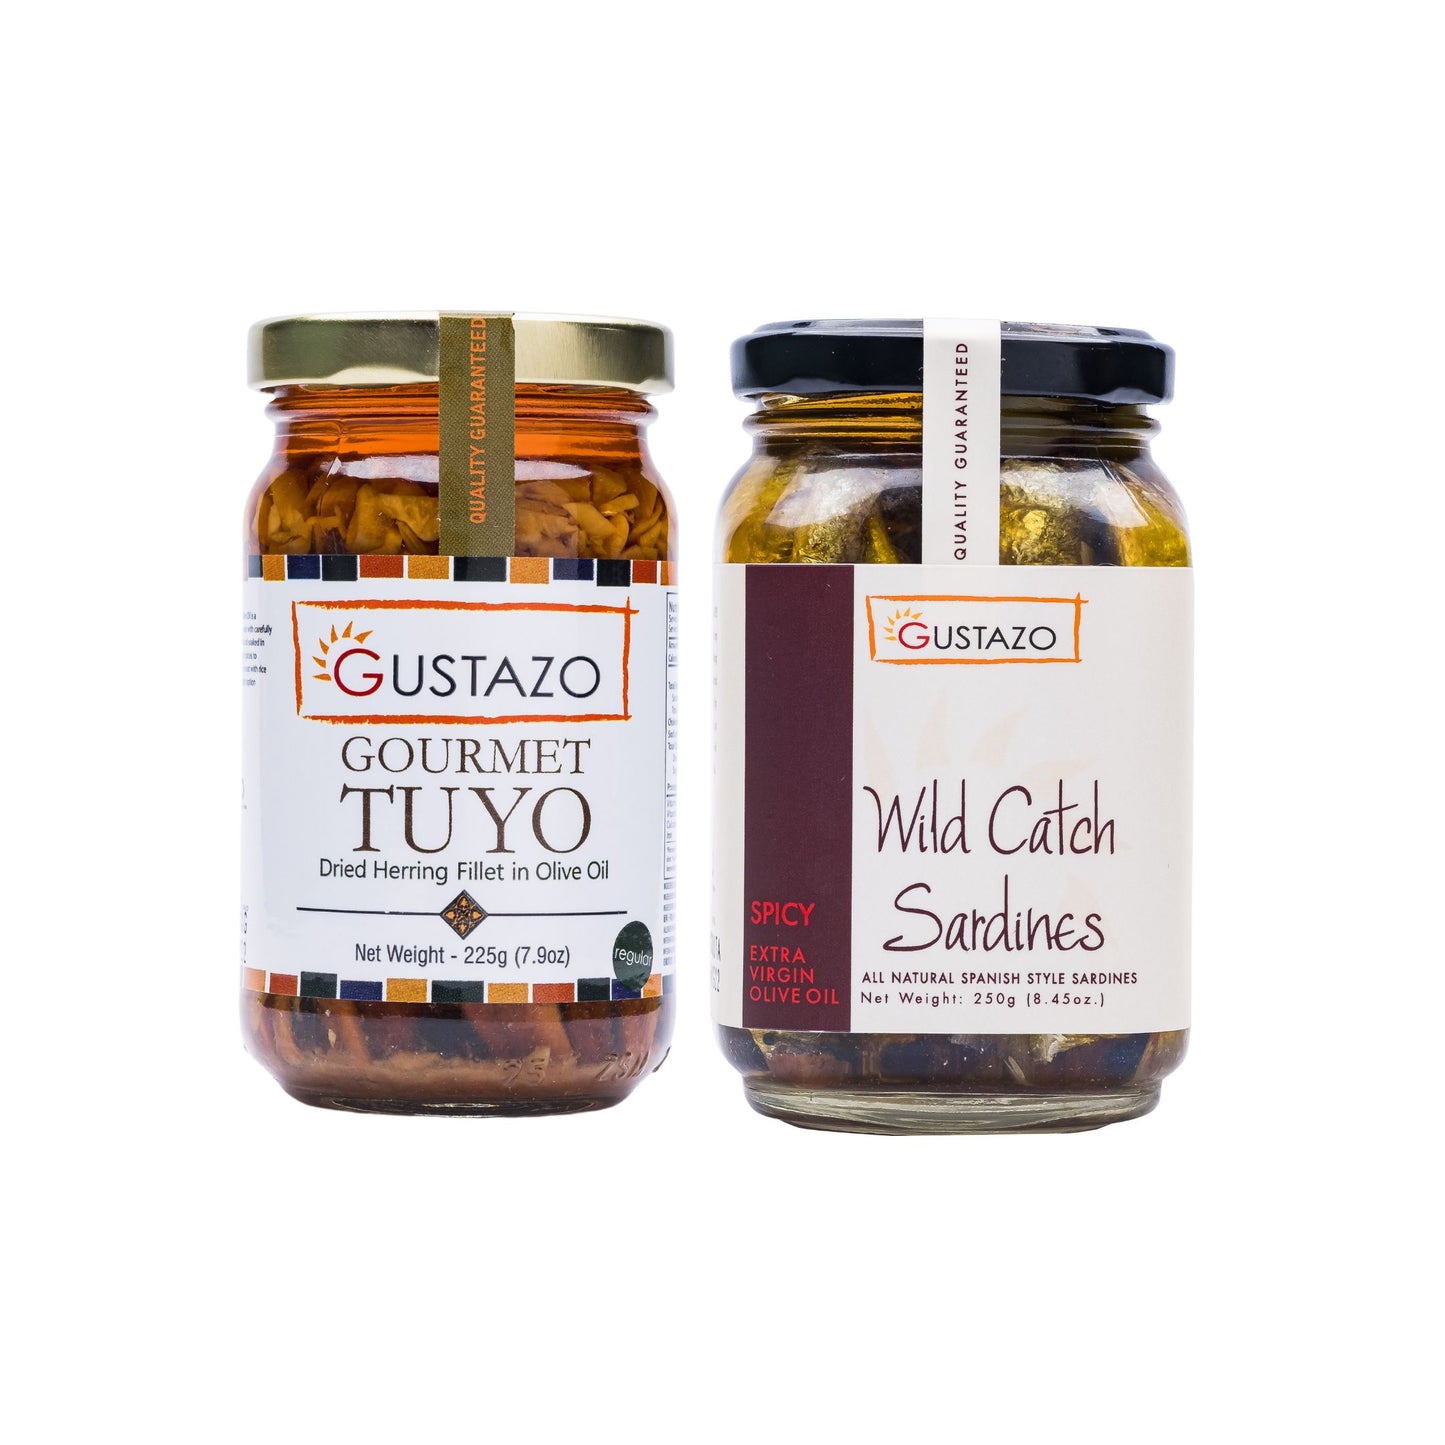 Gourmet Tuyo in Olive Oil & Wild Catch Sardines Spicy EVOO in Duo Box